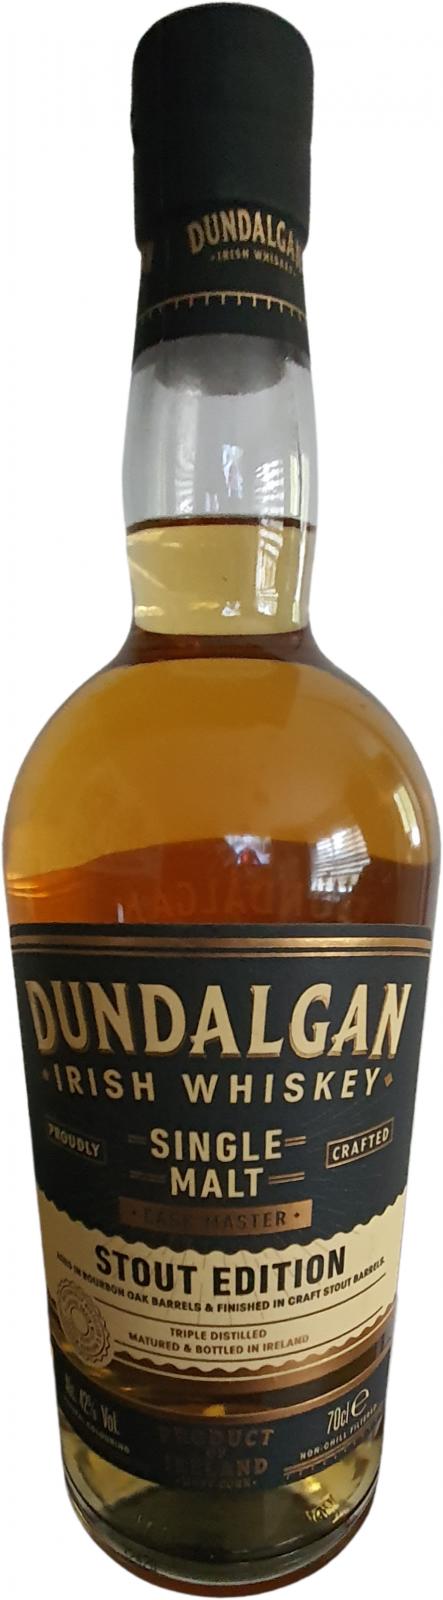 Dundalgan Stout Edition Cask Master Lidl Ireland 42% 700ml